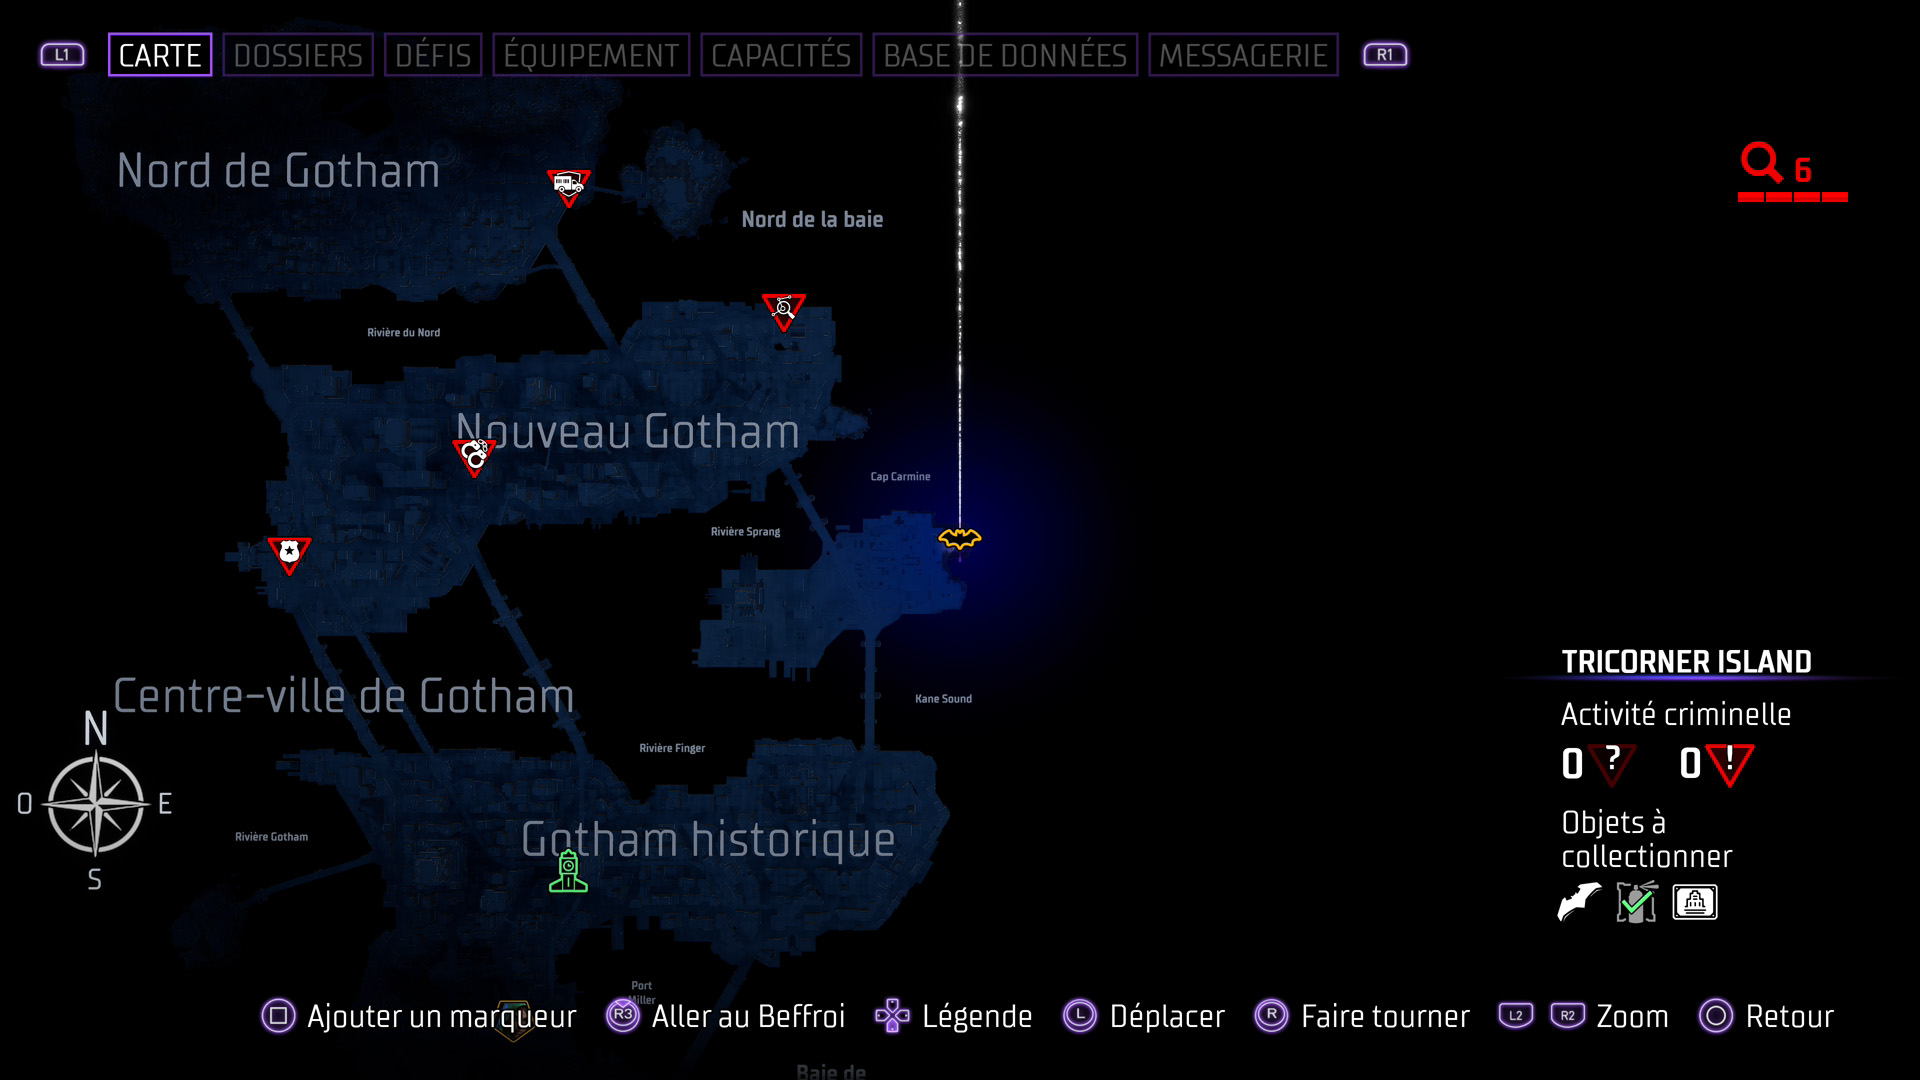 Les batarangs - gotham historique- tricorner island - fort dumas - gotham knights